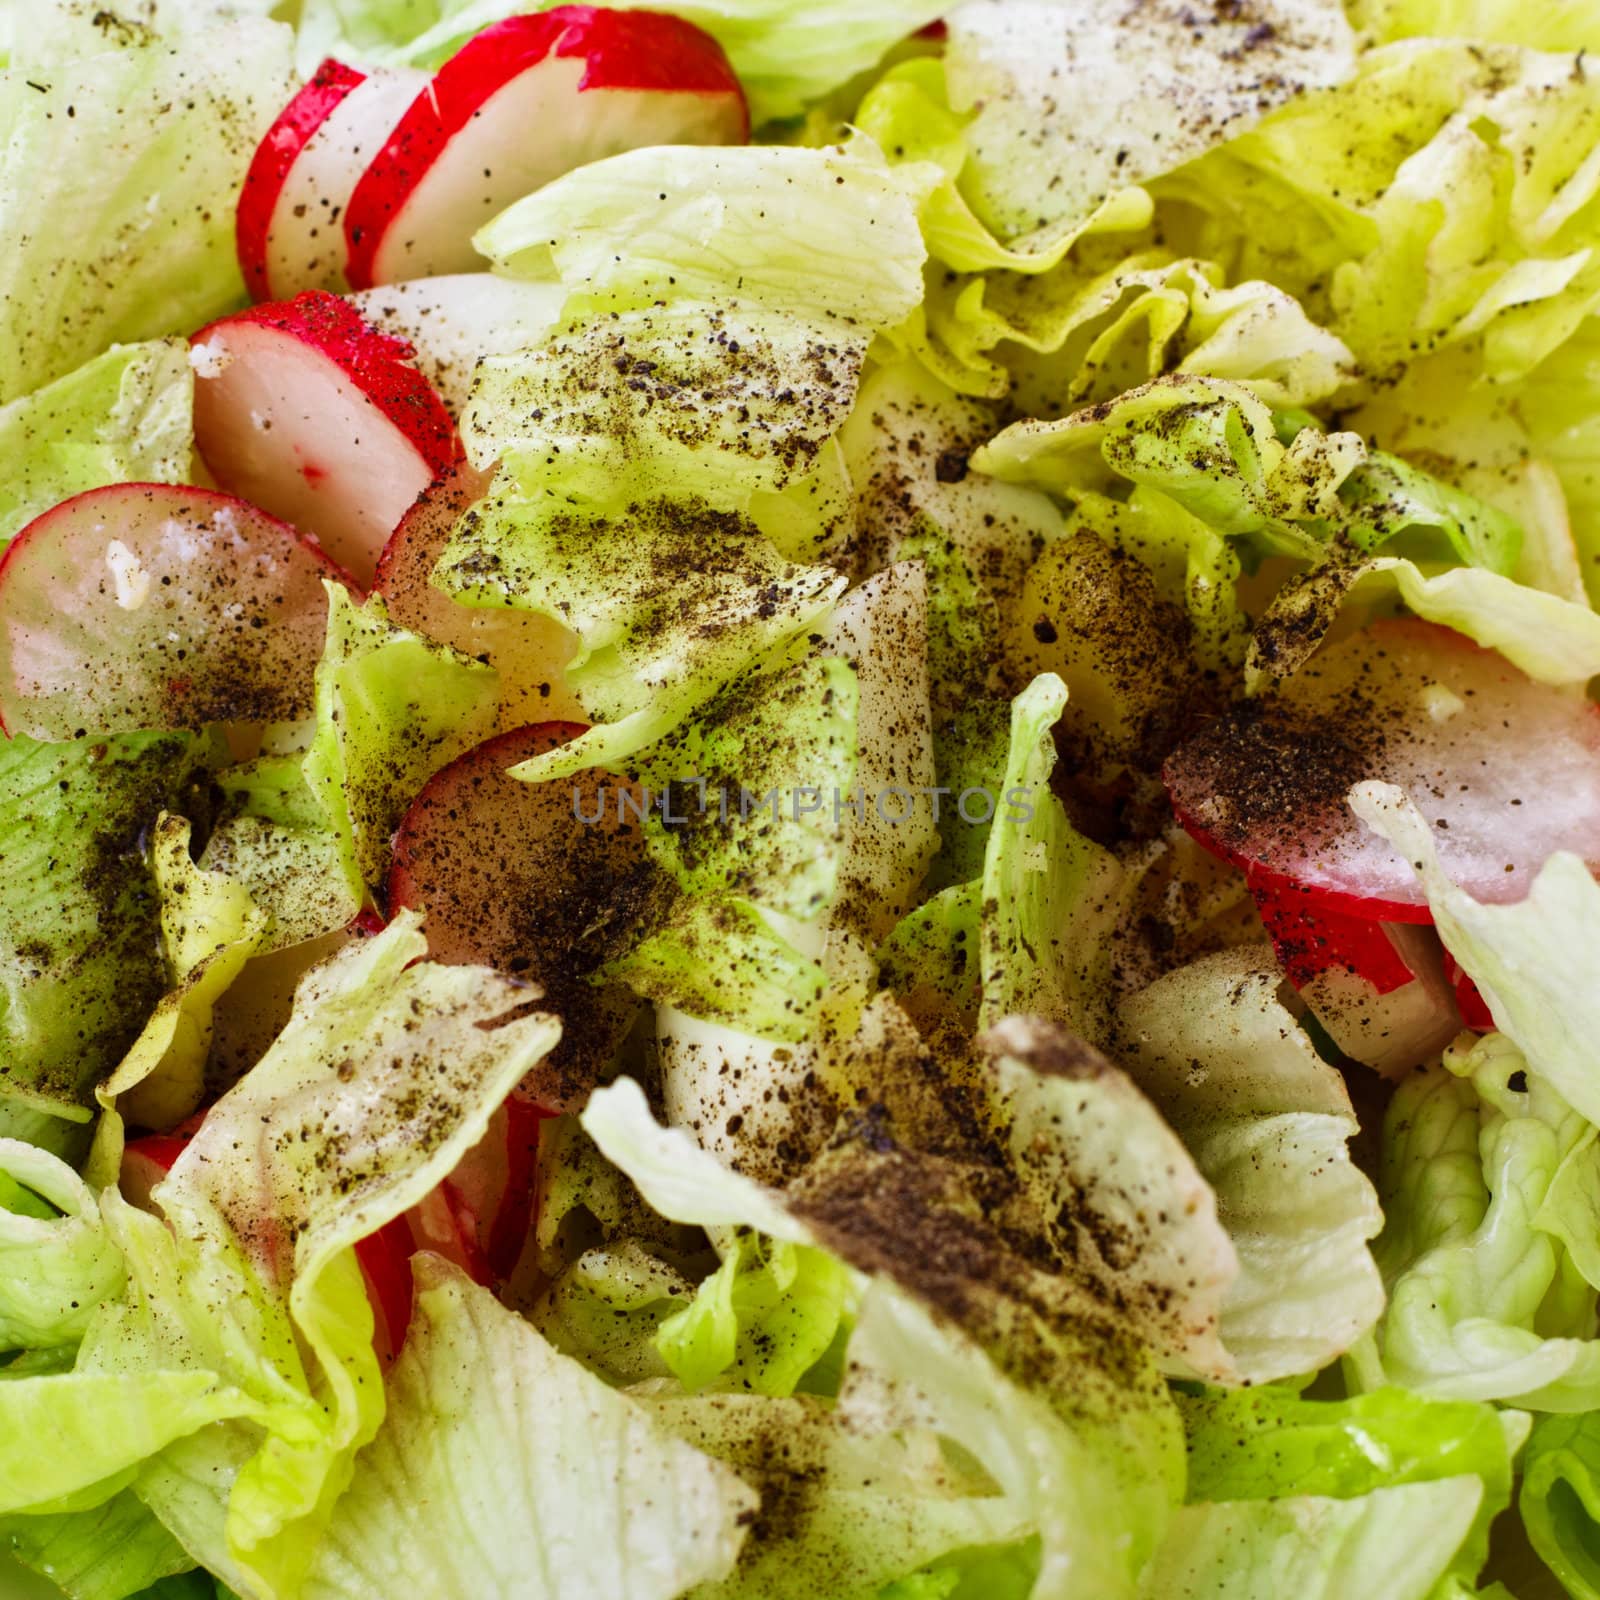 fresh green salad with radish and eggs